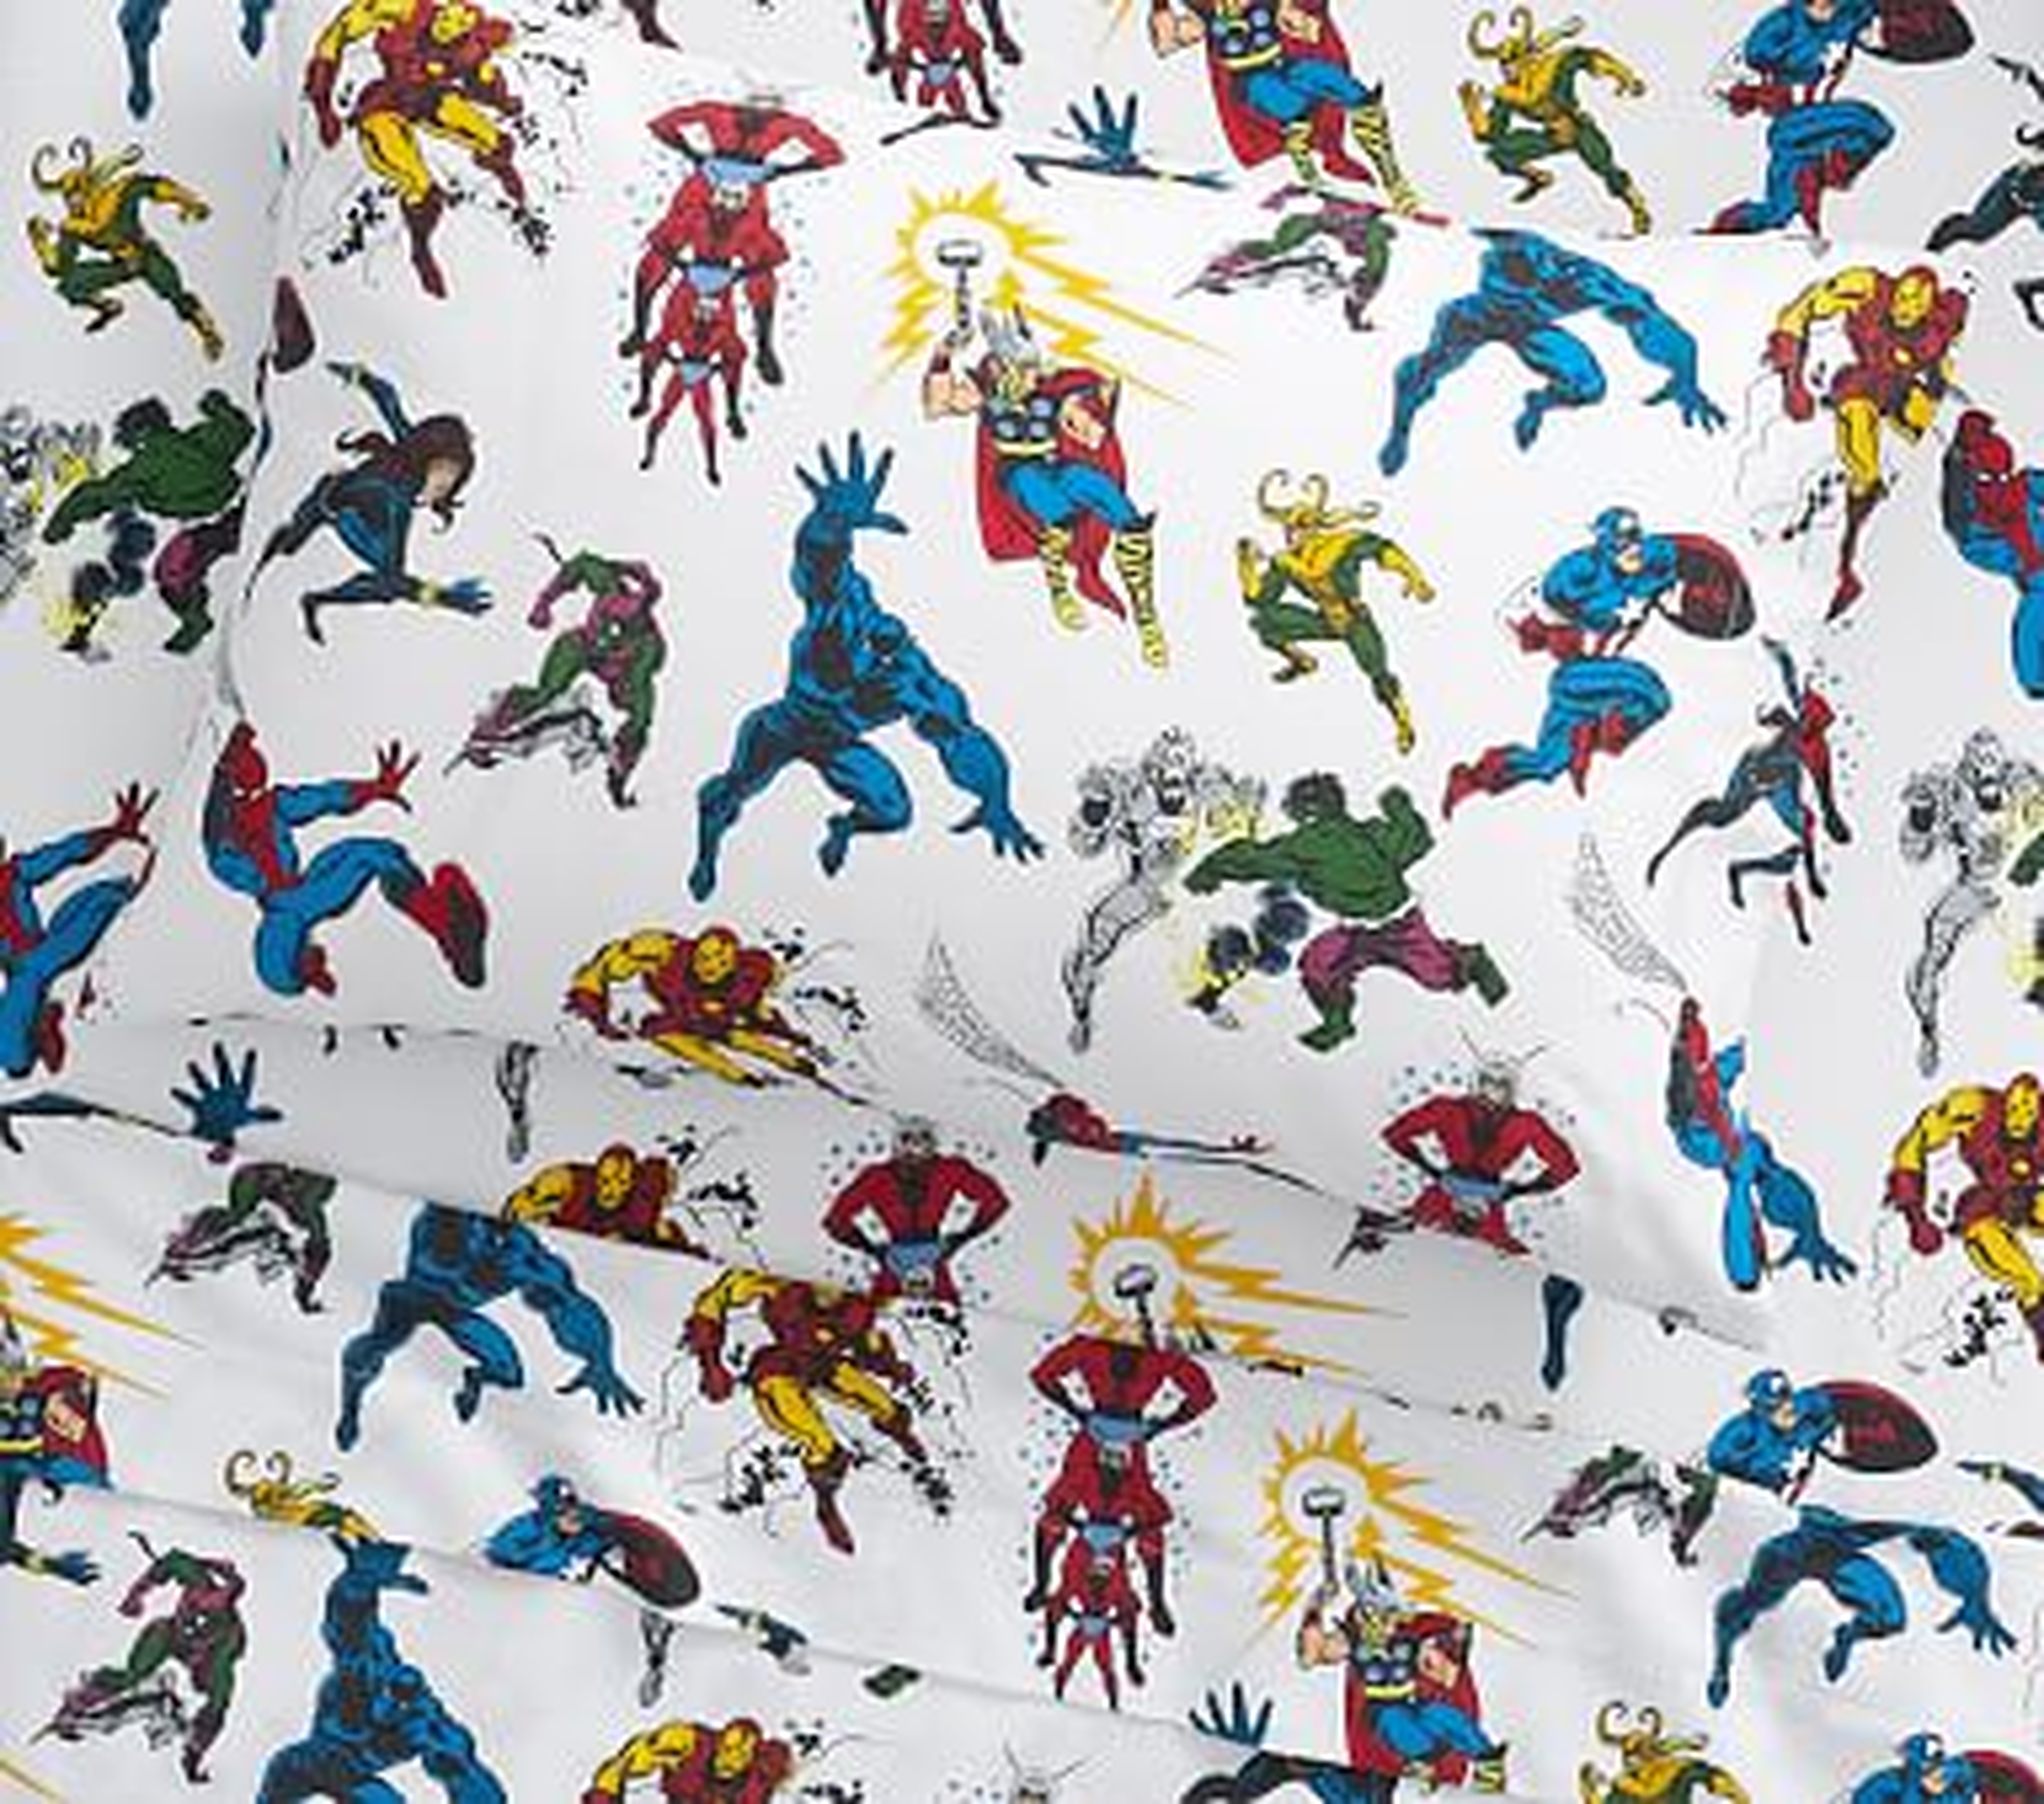 Glow-in-the-Dark Marvel Heroes Sheet Set, Sheet Set, Full, Multi - Pottery Barn Kids